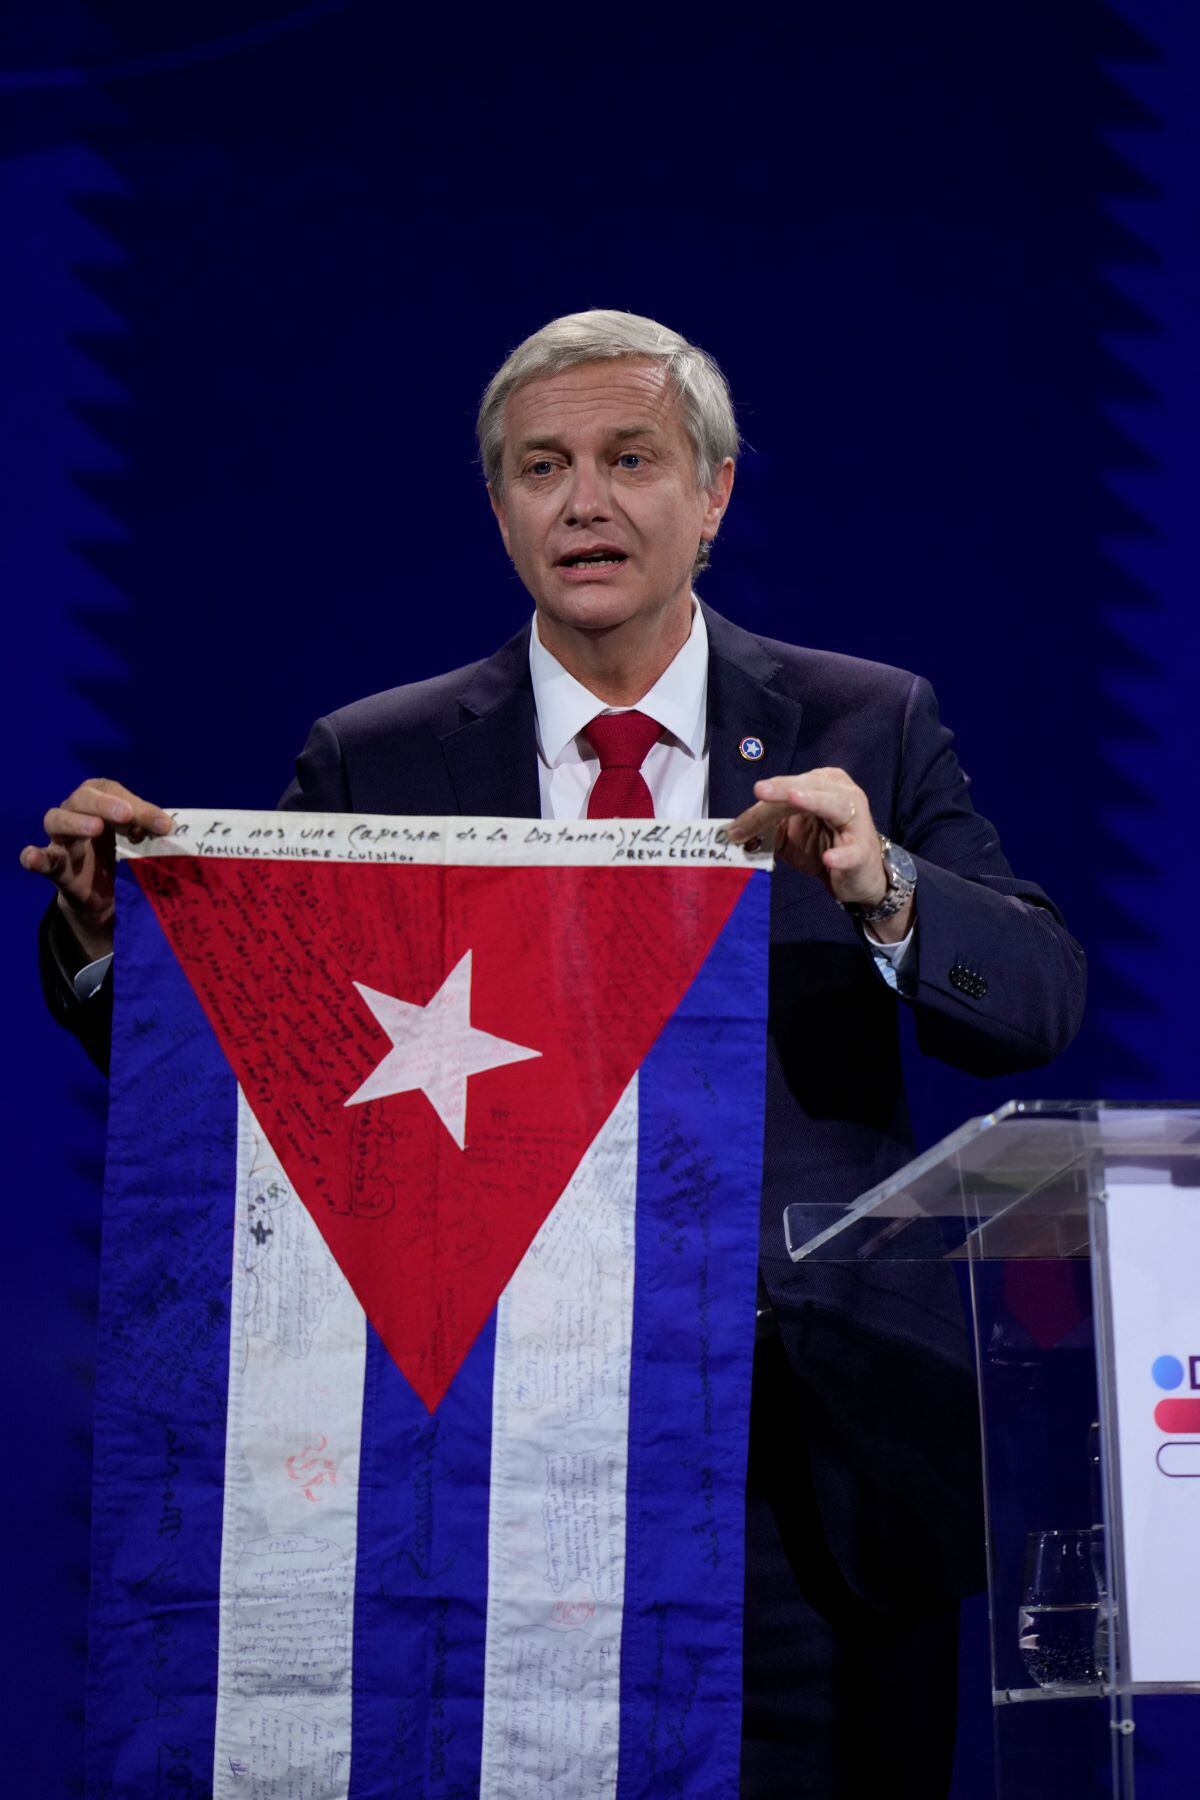 José Antonio Kast holds a Cuban flag before a televised debate on TVN in Santiago, on November 15, 2021. (ESTEBAN FELIX / POOL / AFP).